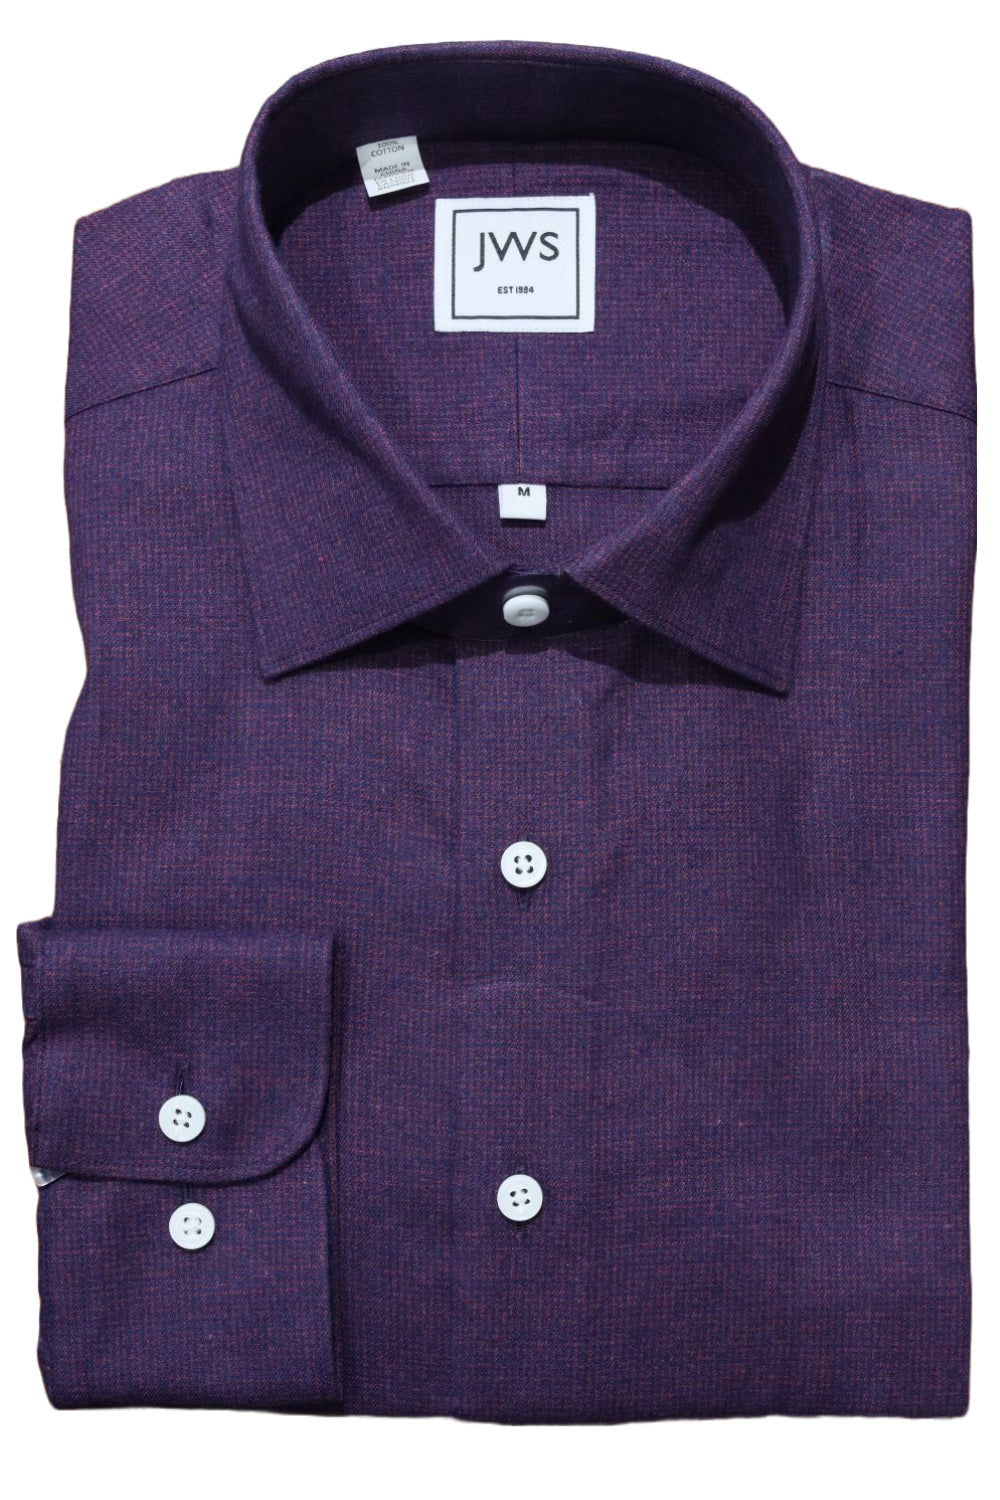 Purple Flannel Shirt